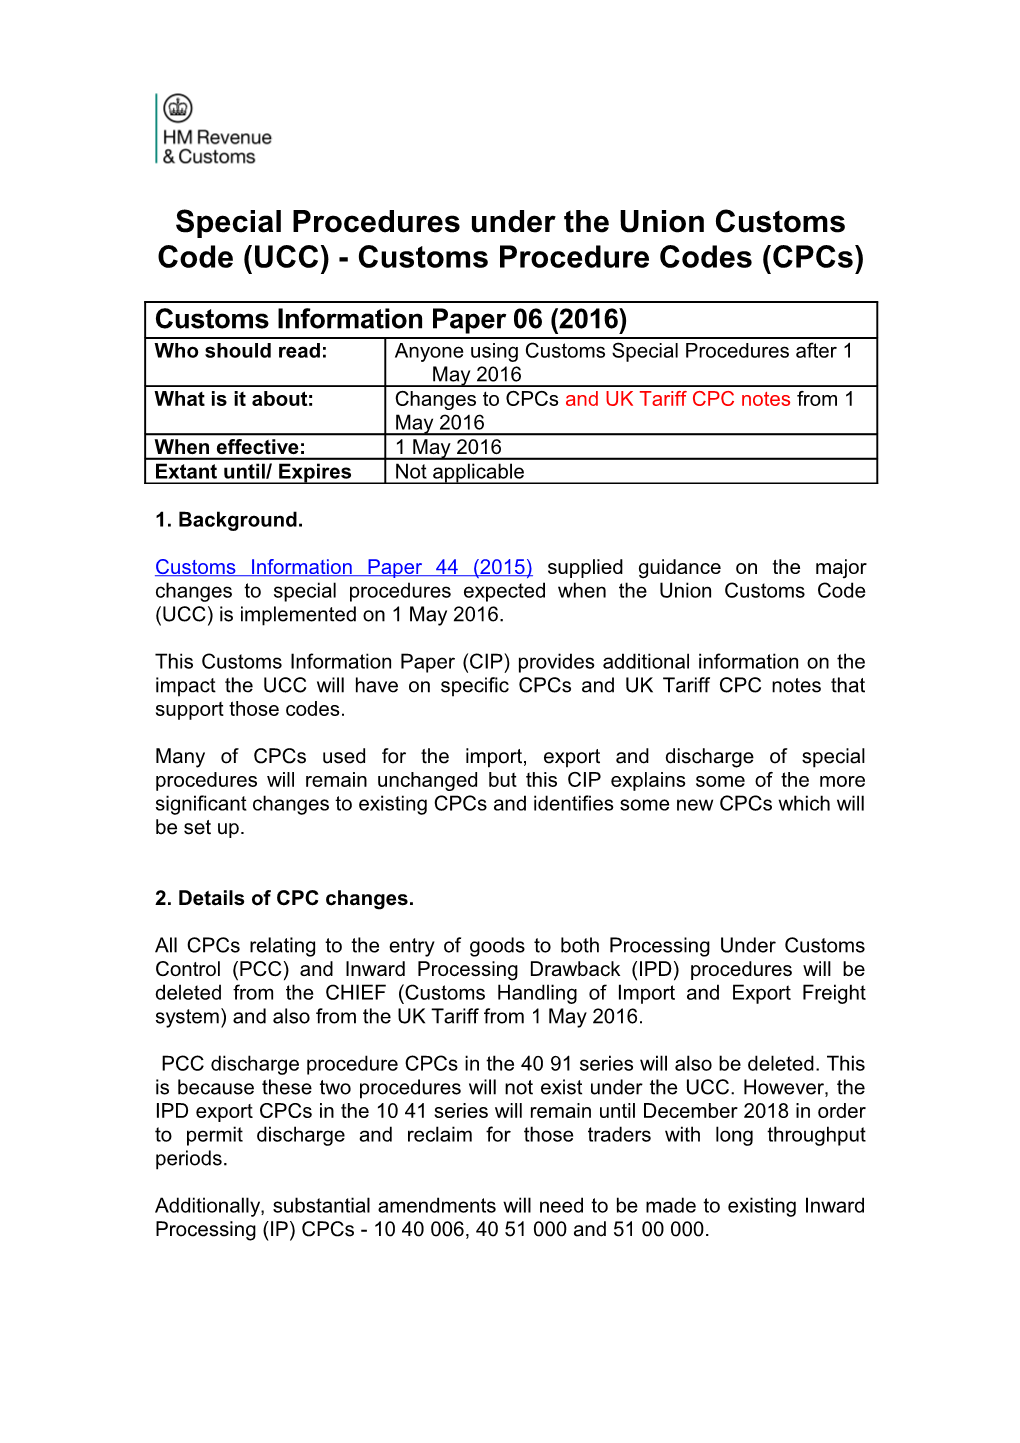 Special Procedures Under the Union Customs Code (UCC)-Customs Procedure Codes (Cpcs)